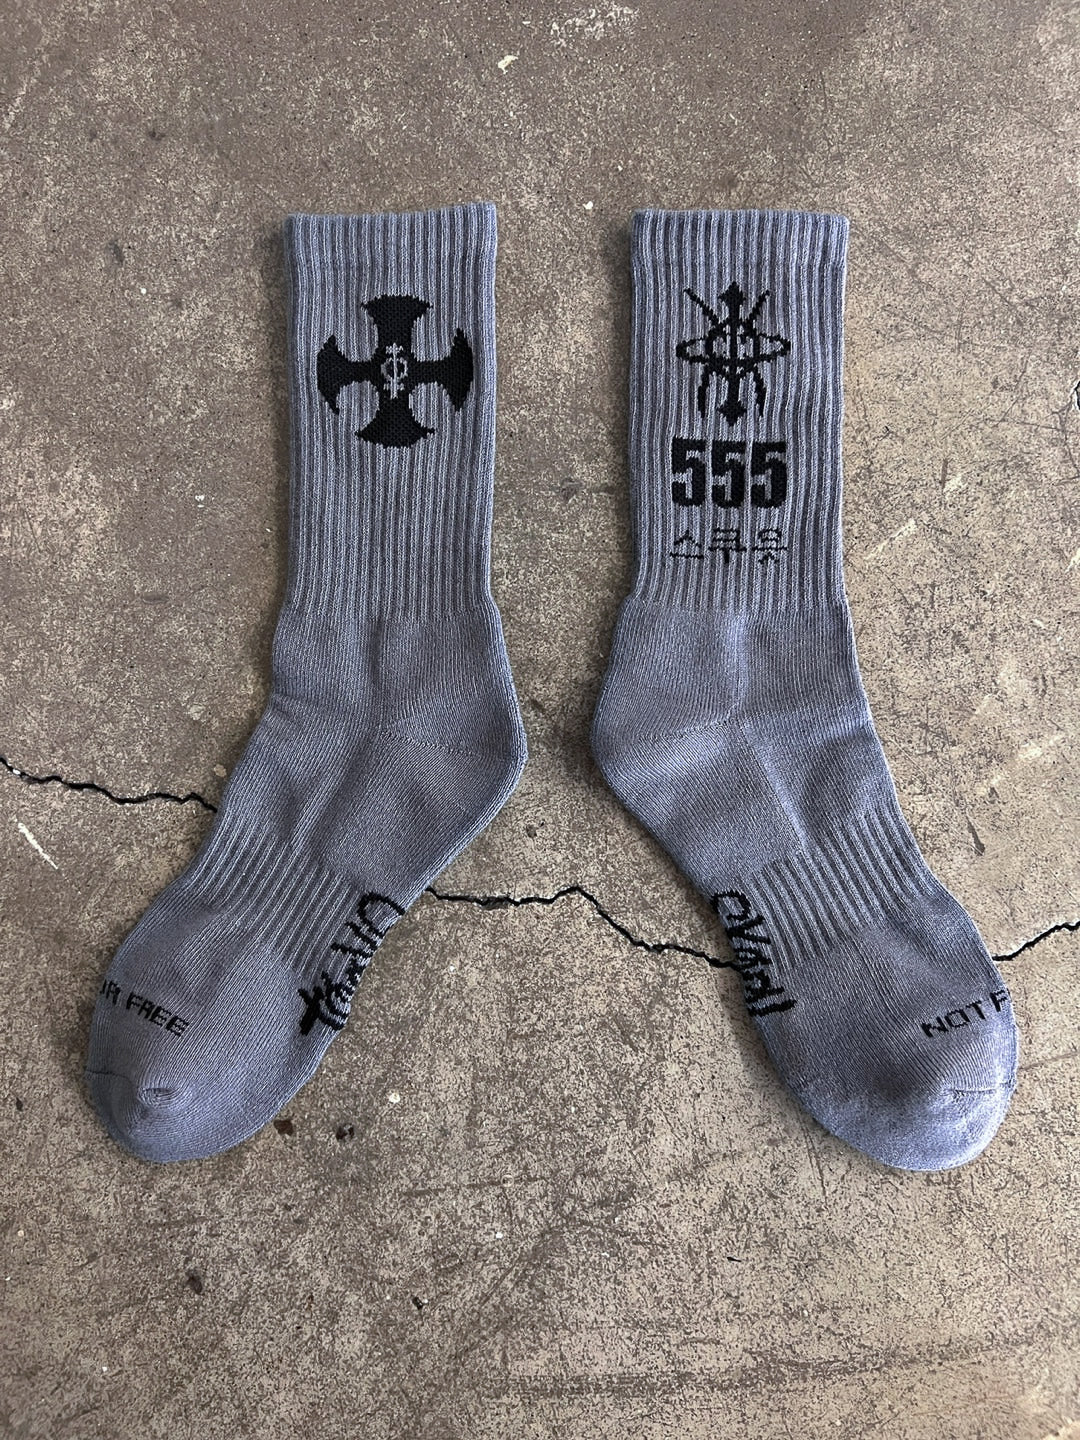 Expelled Socks (3 pack)